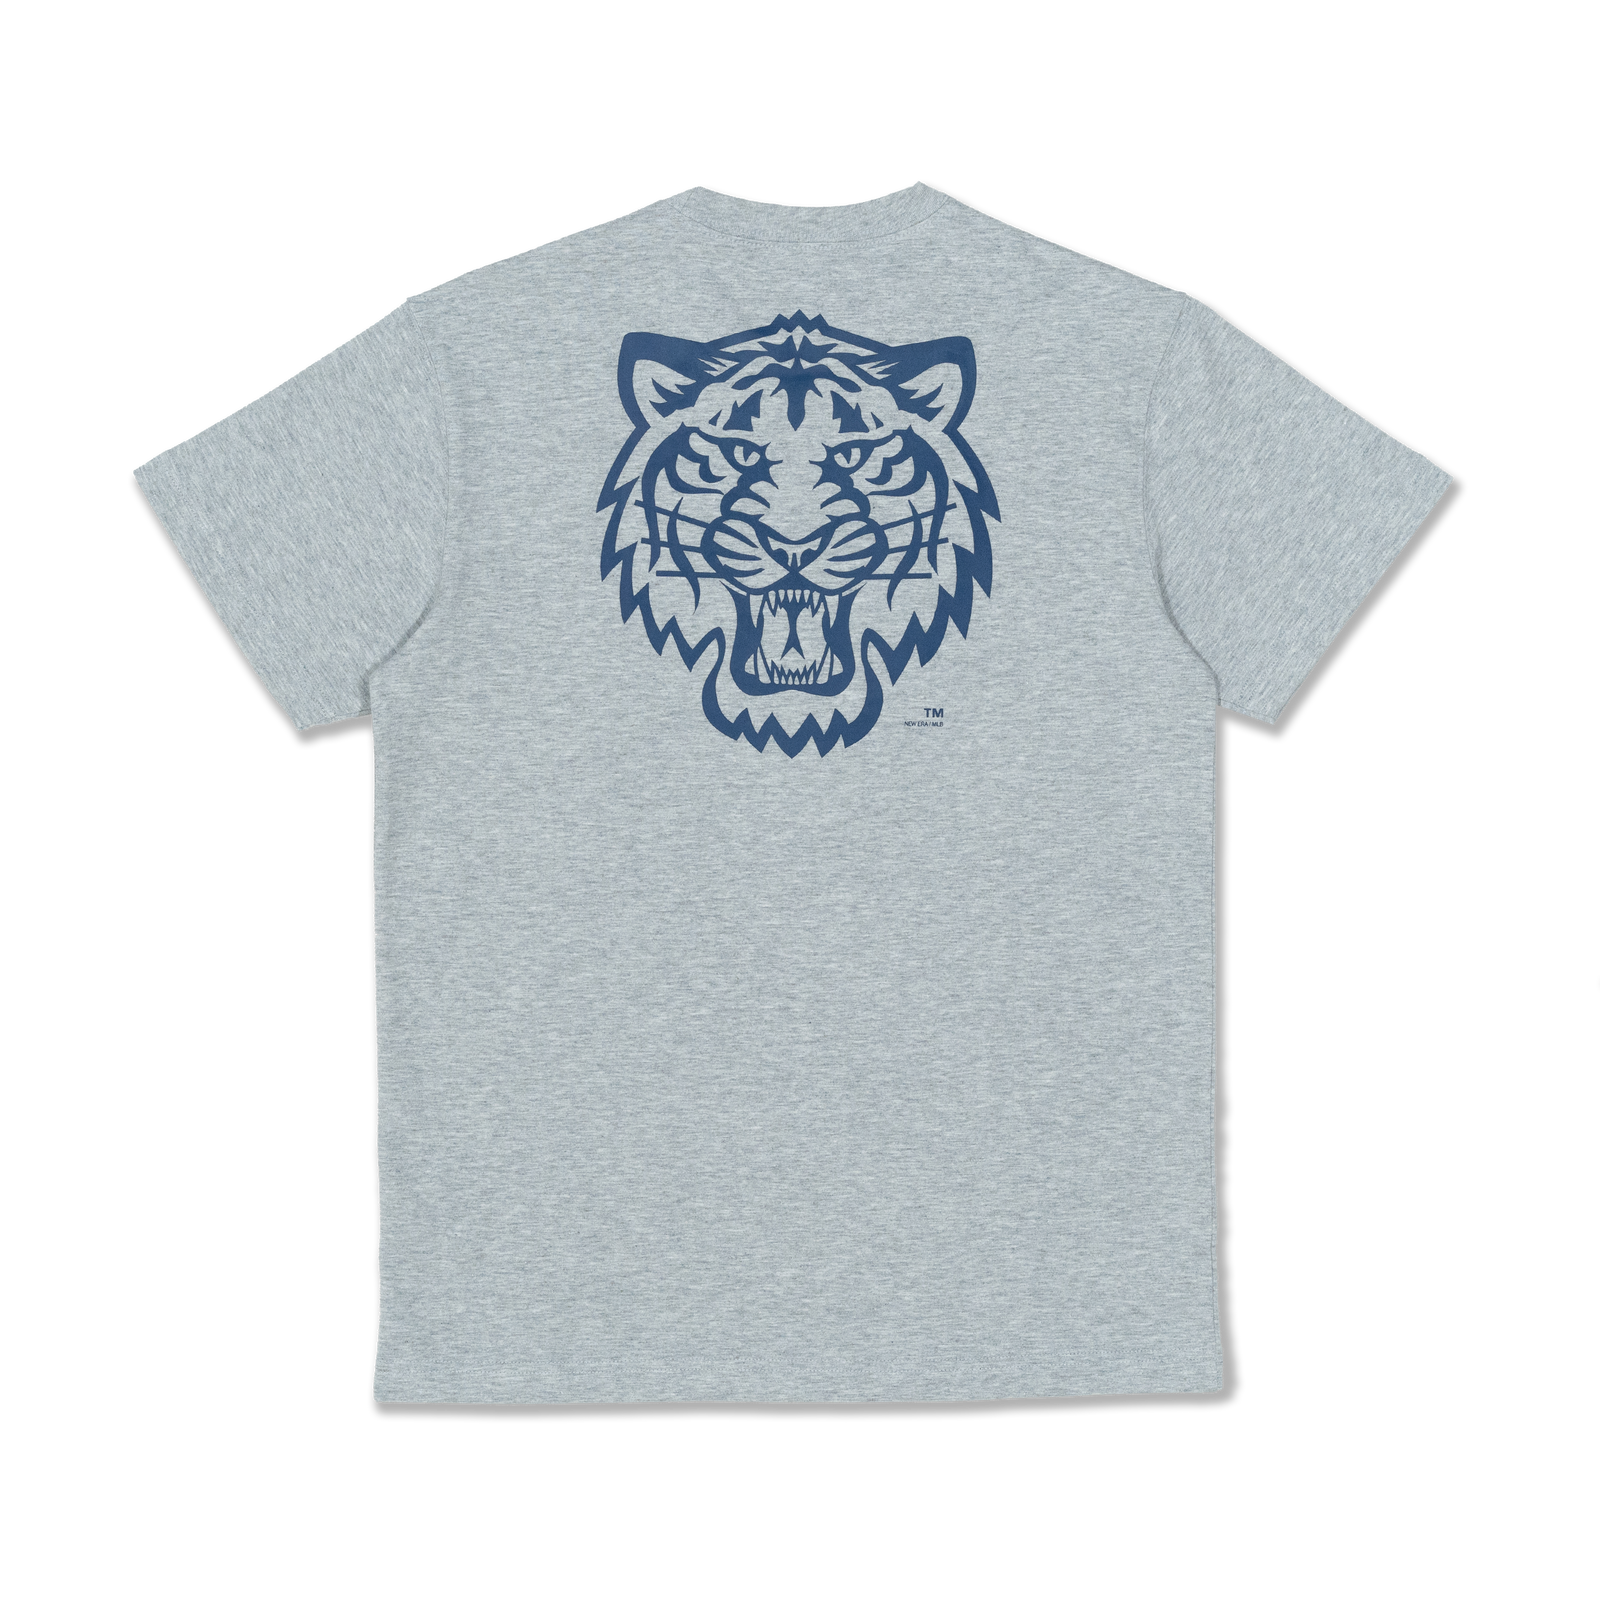 Adidas Detroit Tigers Adult Short Sleeve Baseball Practice Tee Shirt